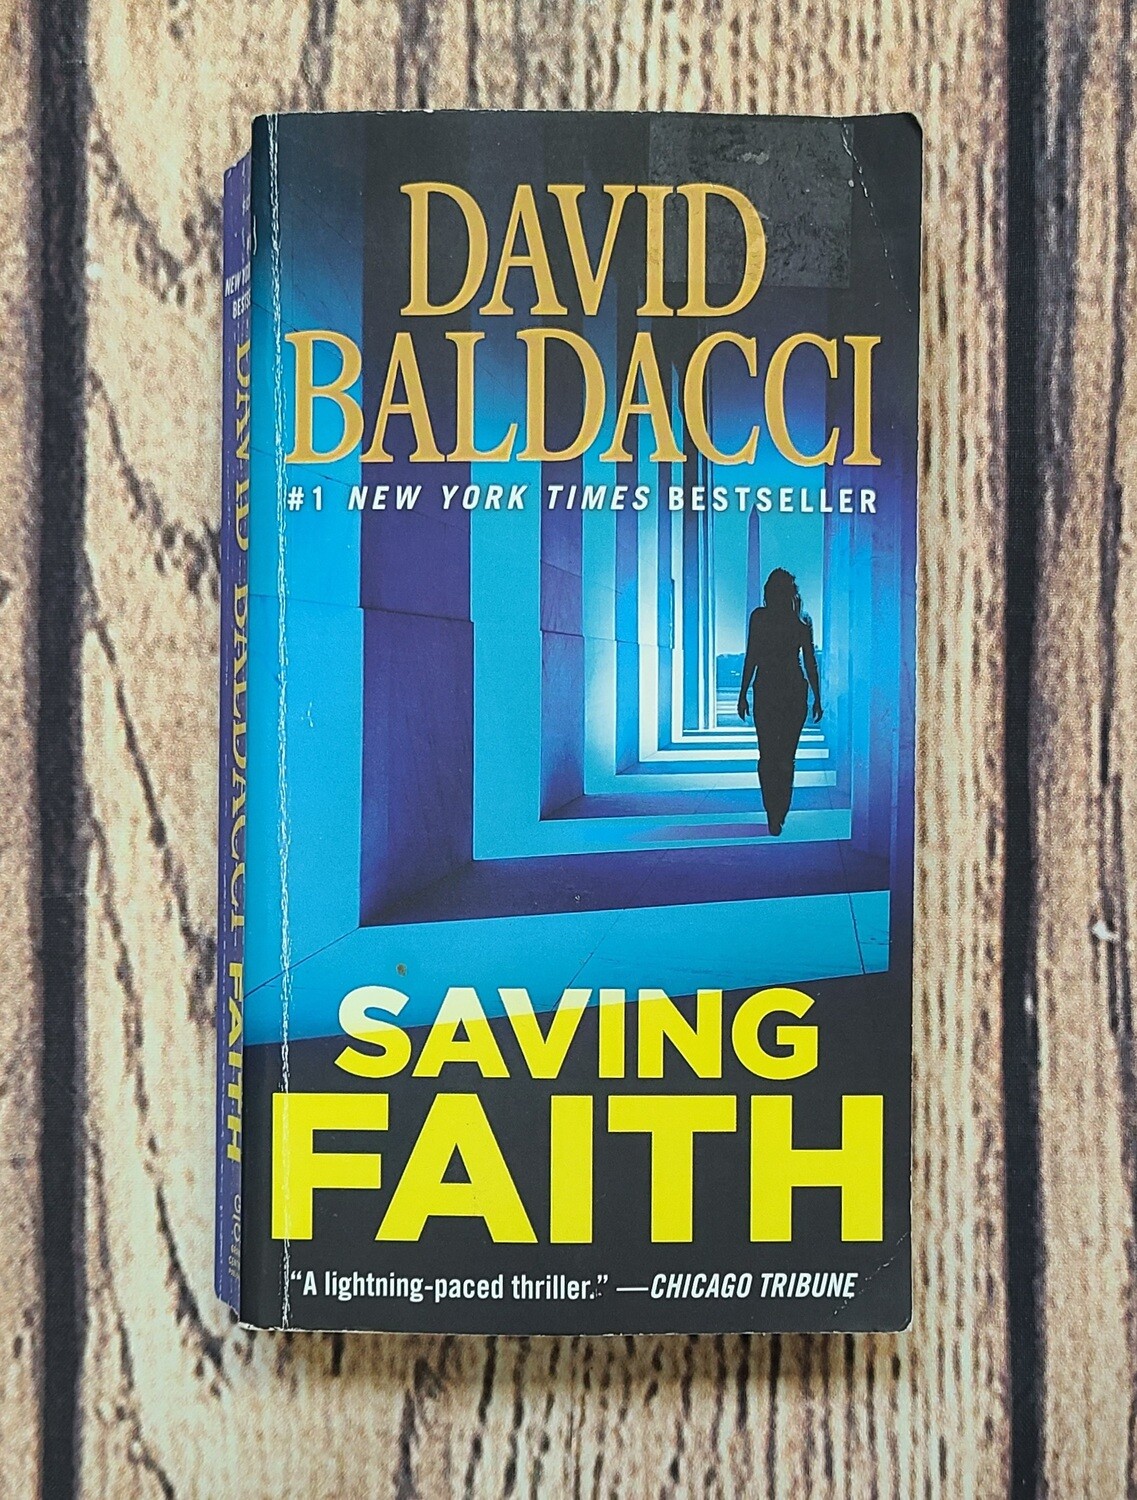 Saving Faith by David Baldacci